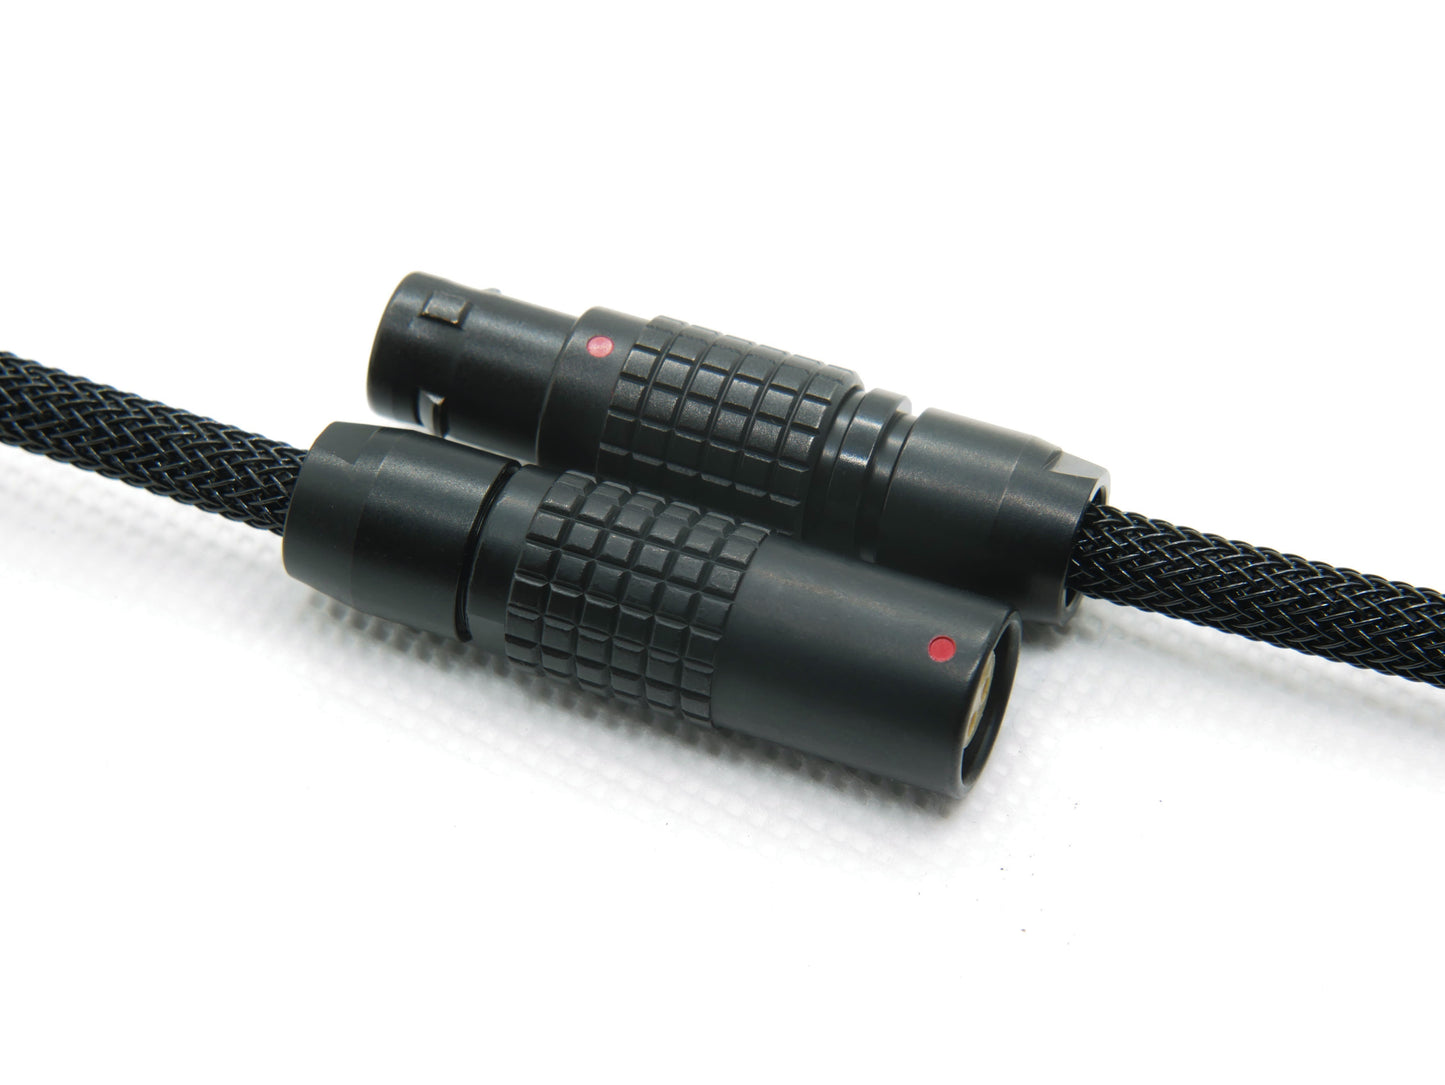 Black Lemo Style Cable